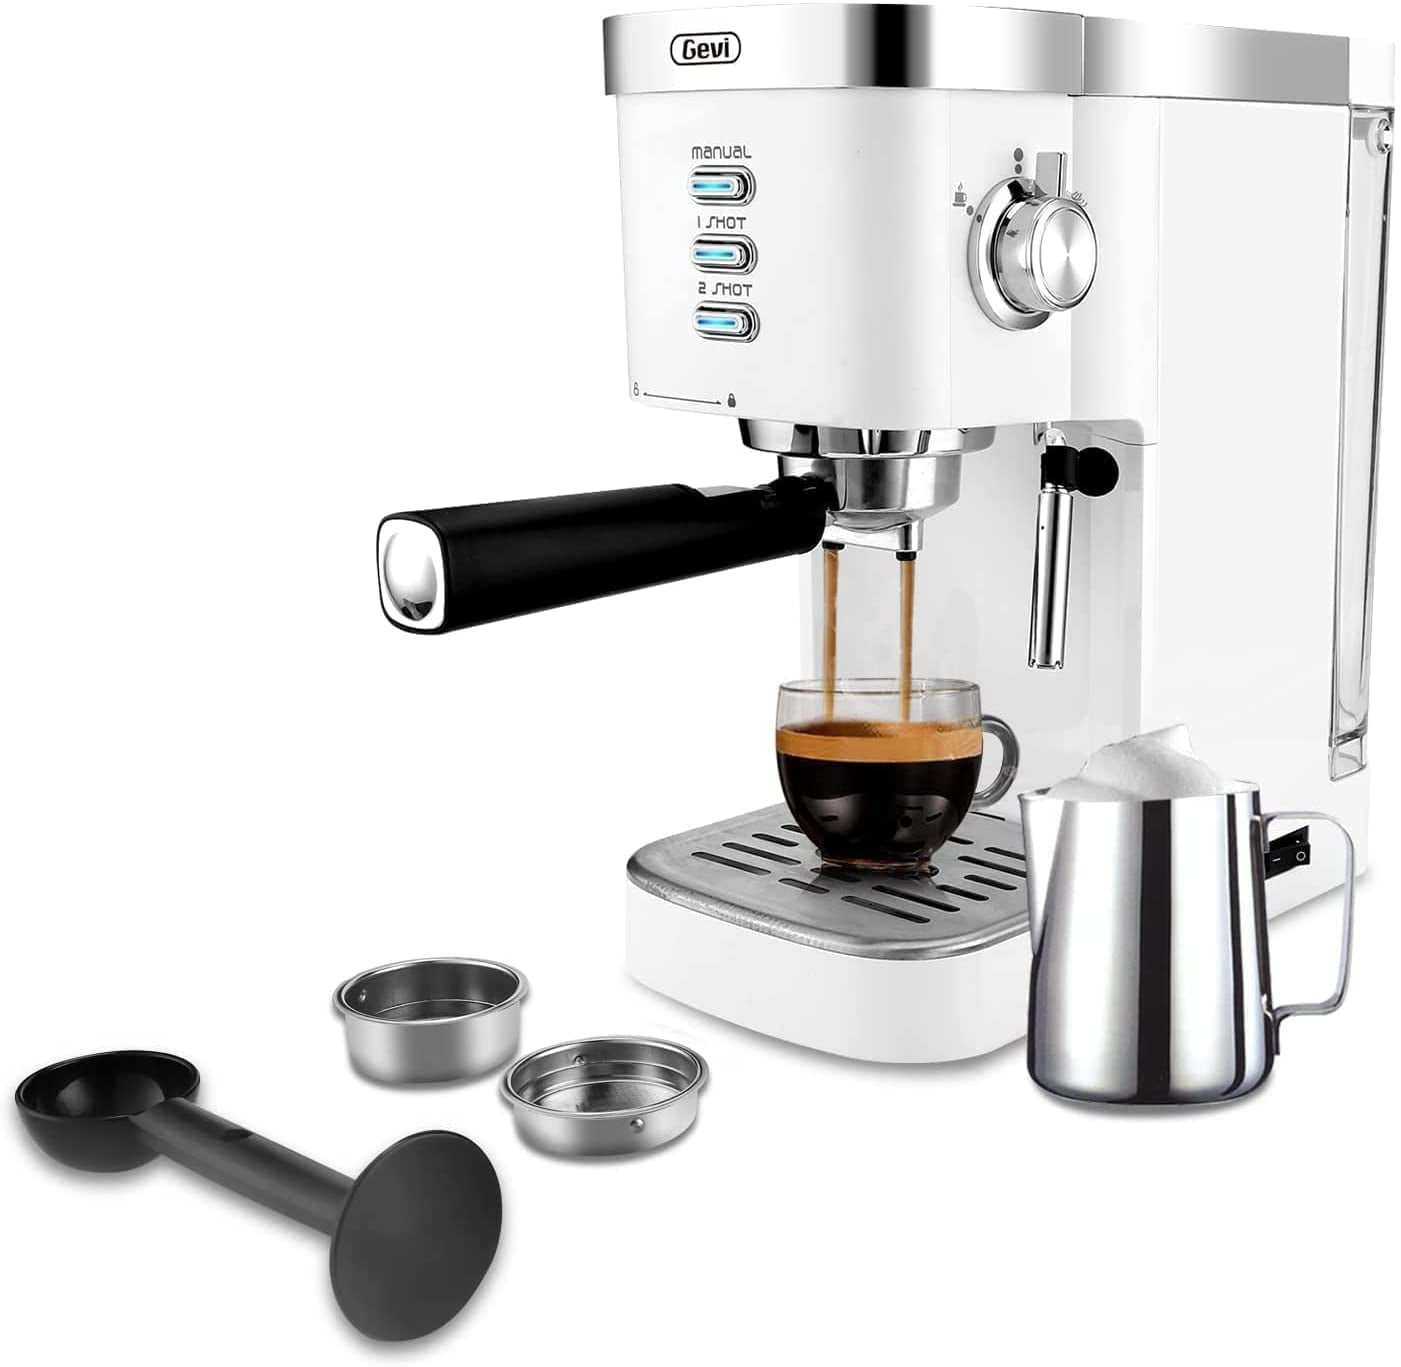 TKM Home White Espresso Machine 20-Bar New Latte Cappuccino Maker With Frother, 1.25 L